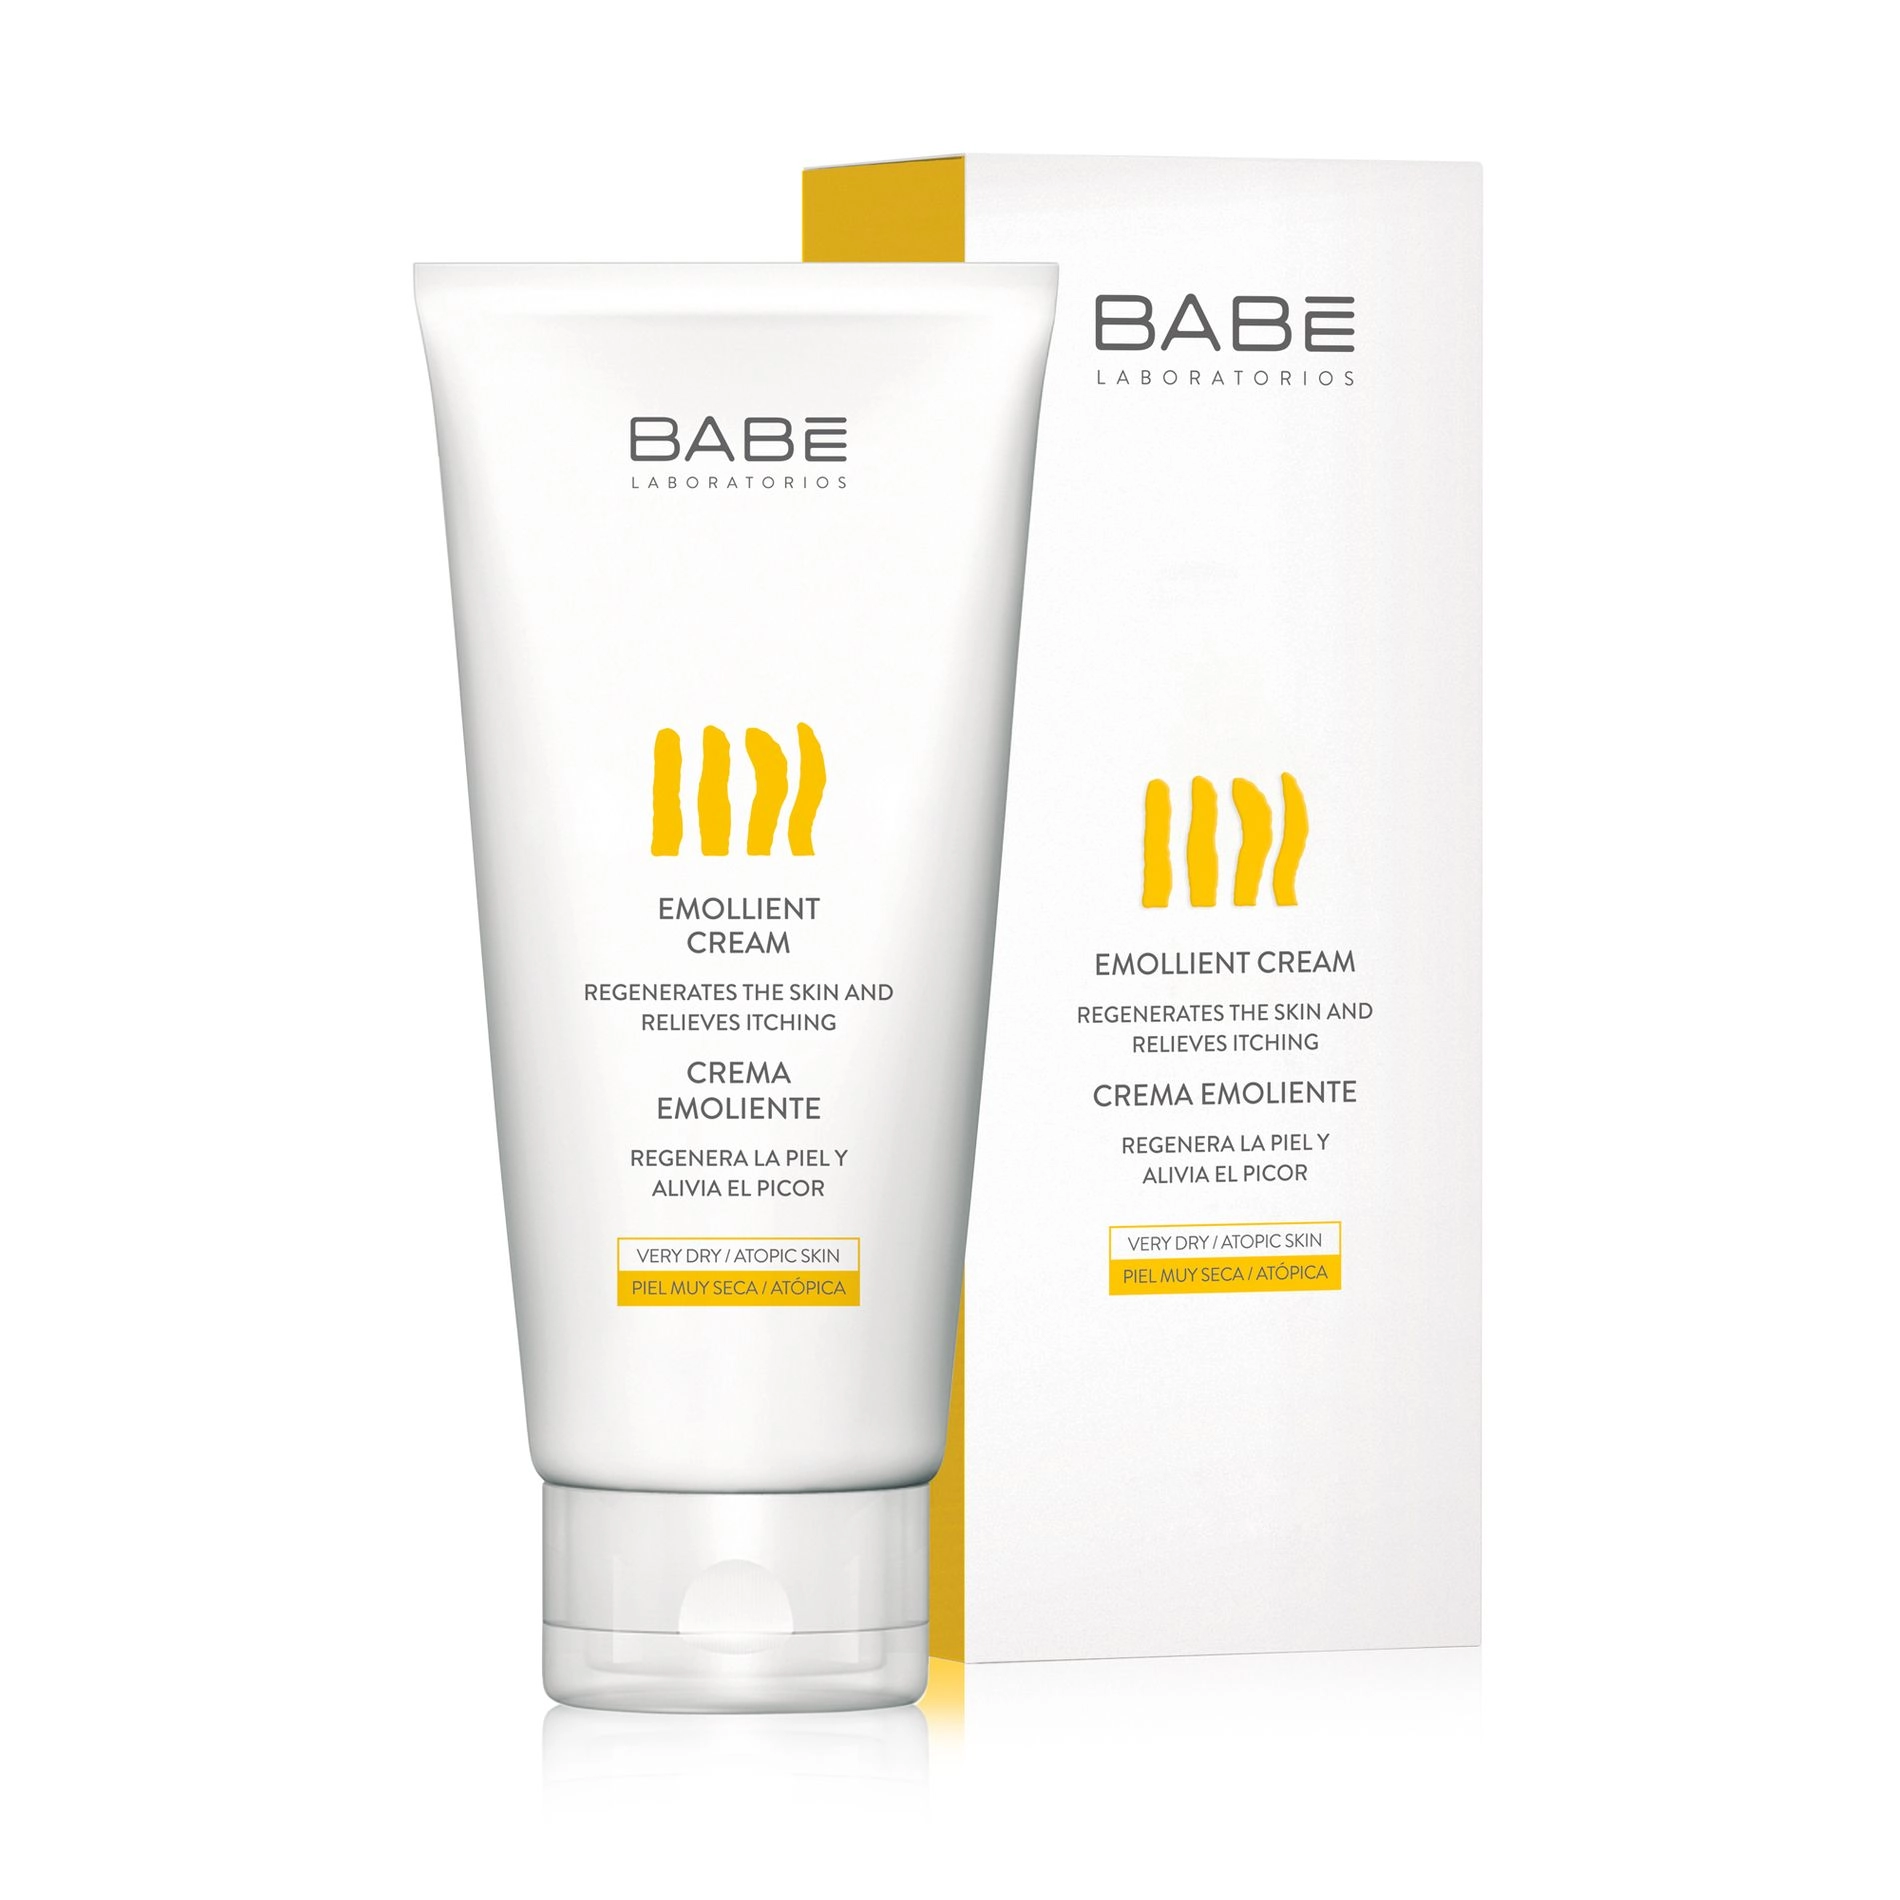 Увлажняющий крем-эмолиент для сухой кожи - BABE Laboratorios Emollient Cream, 200 мл - фото N3